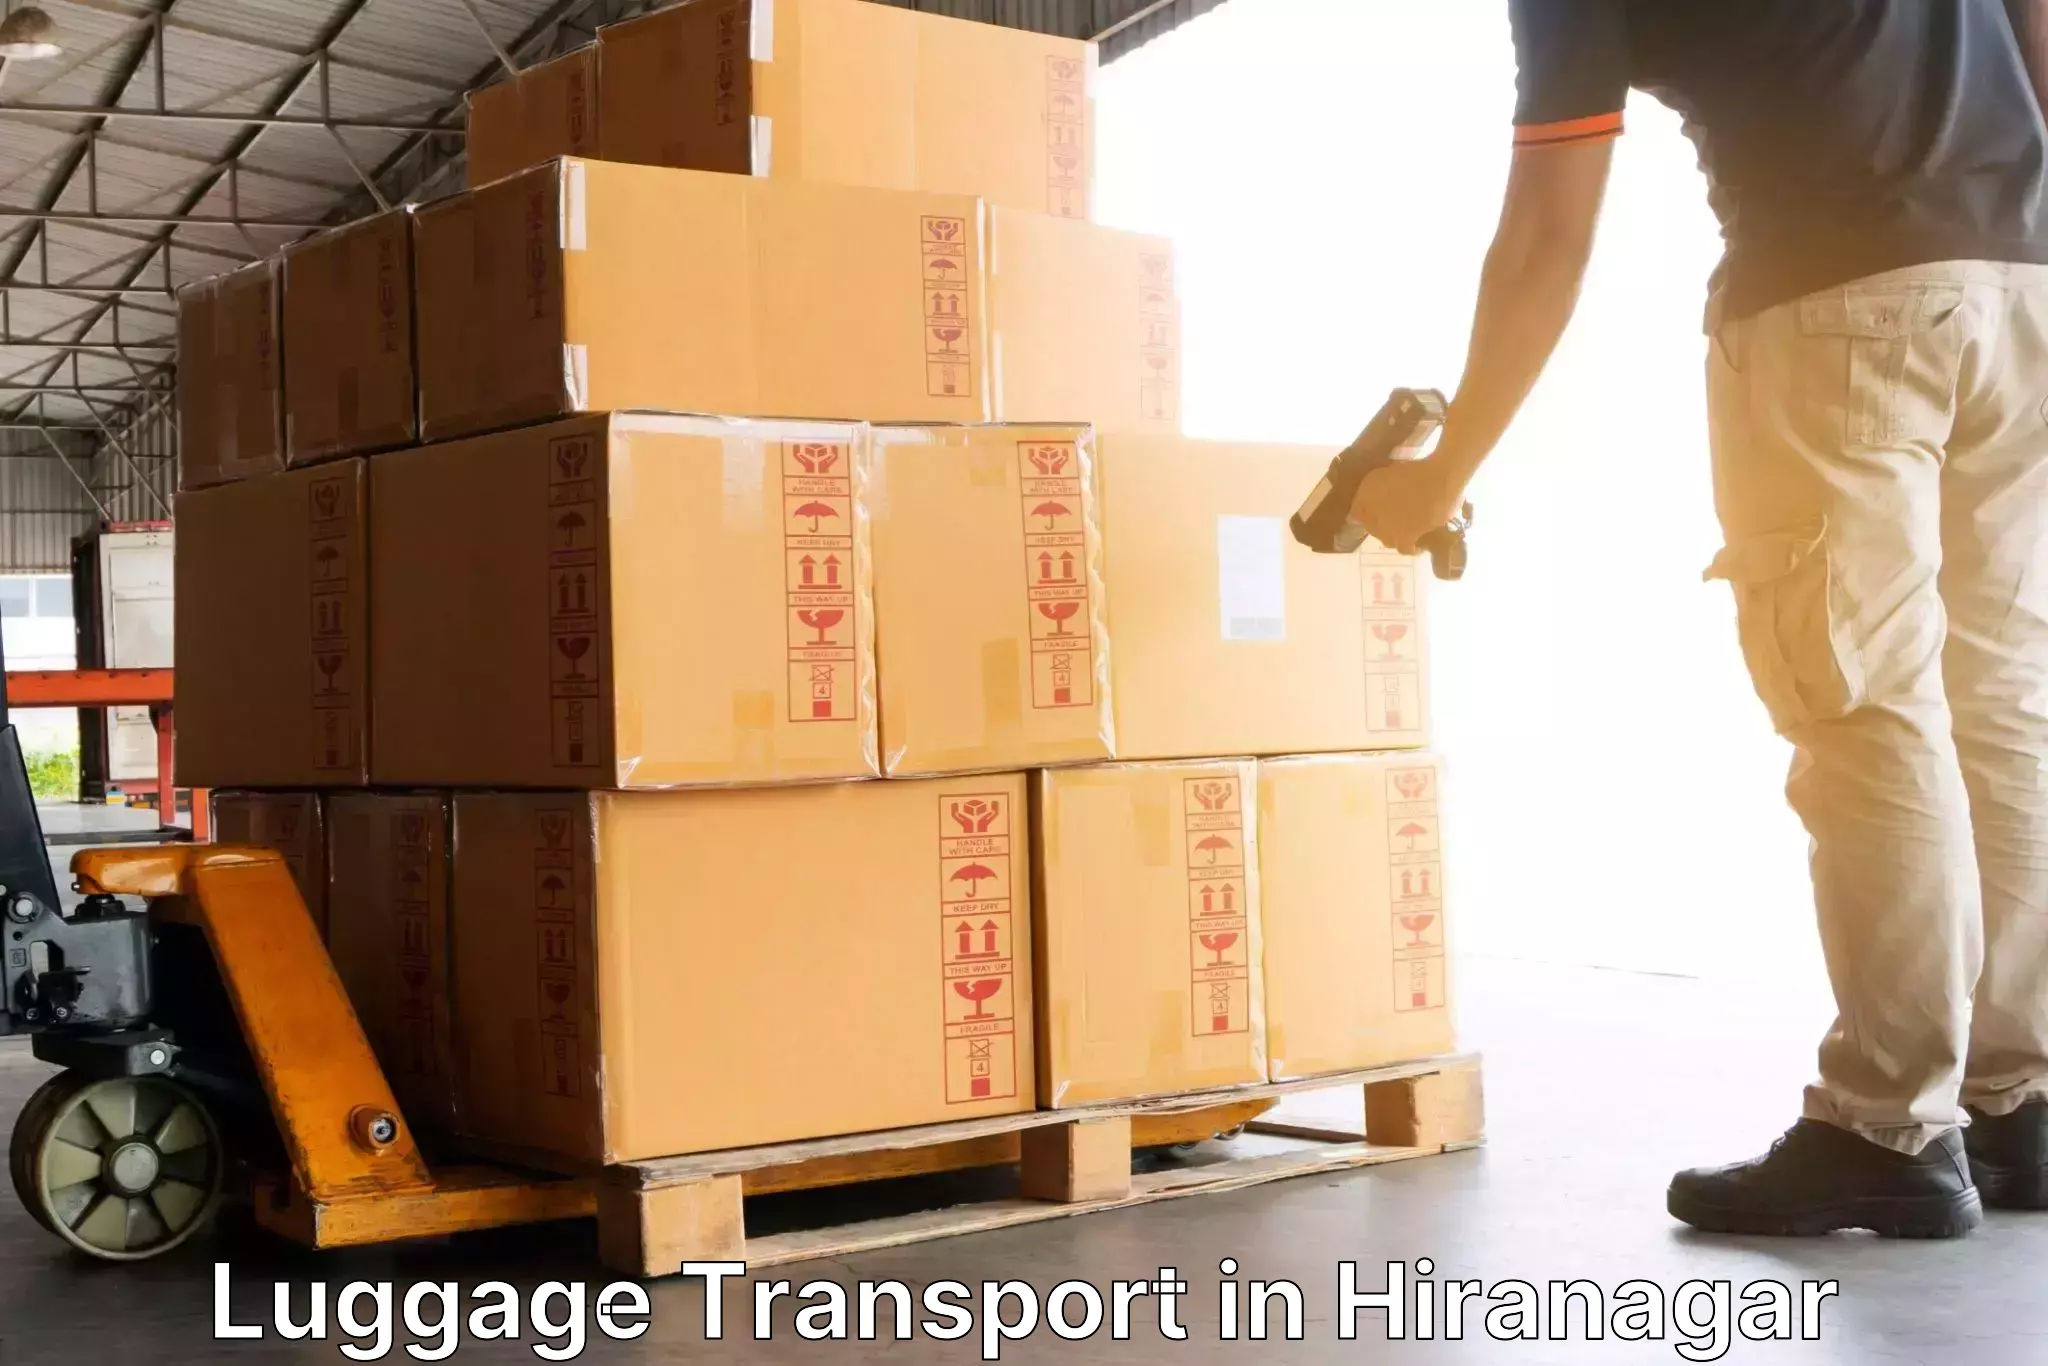 Luggage shipping consultation in Hiranagar